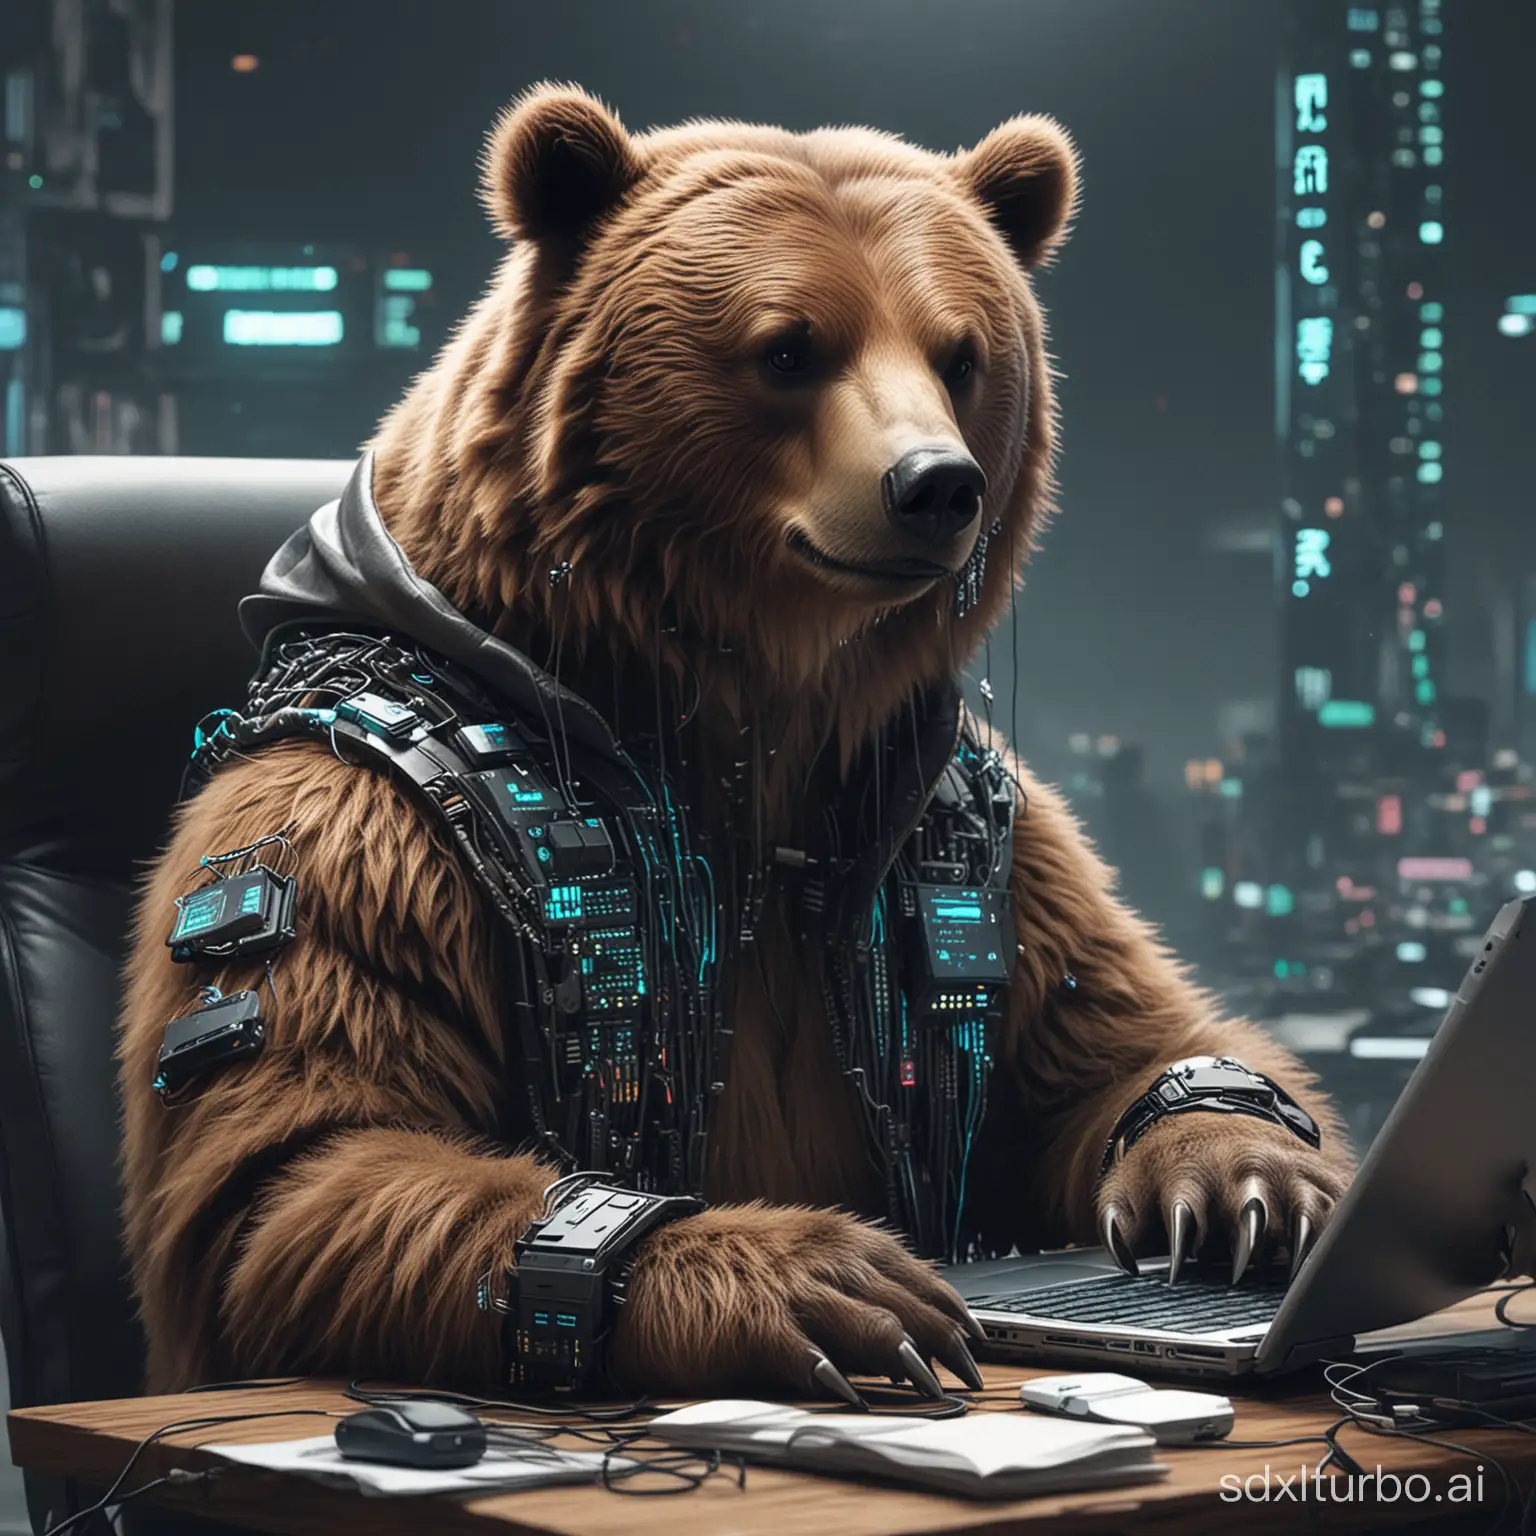 a cute grizzly bear coding cyberpunk style